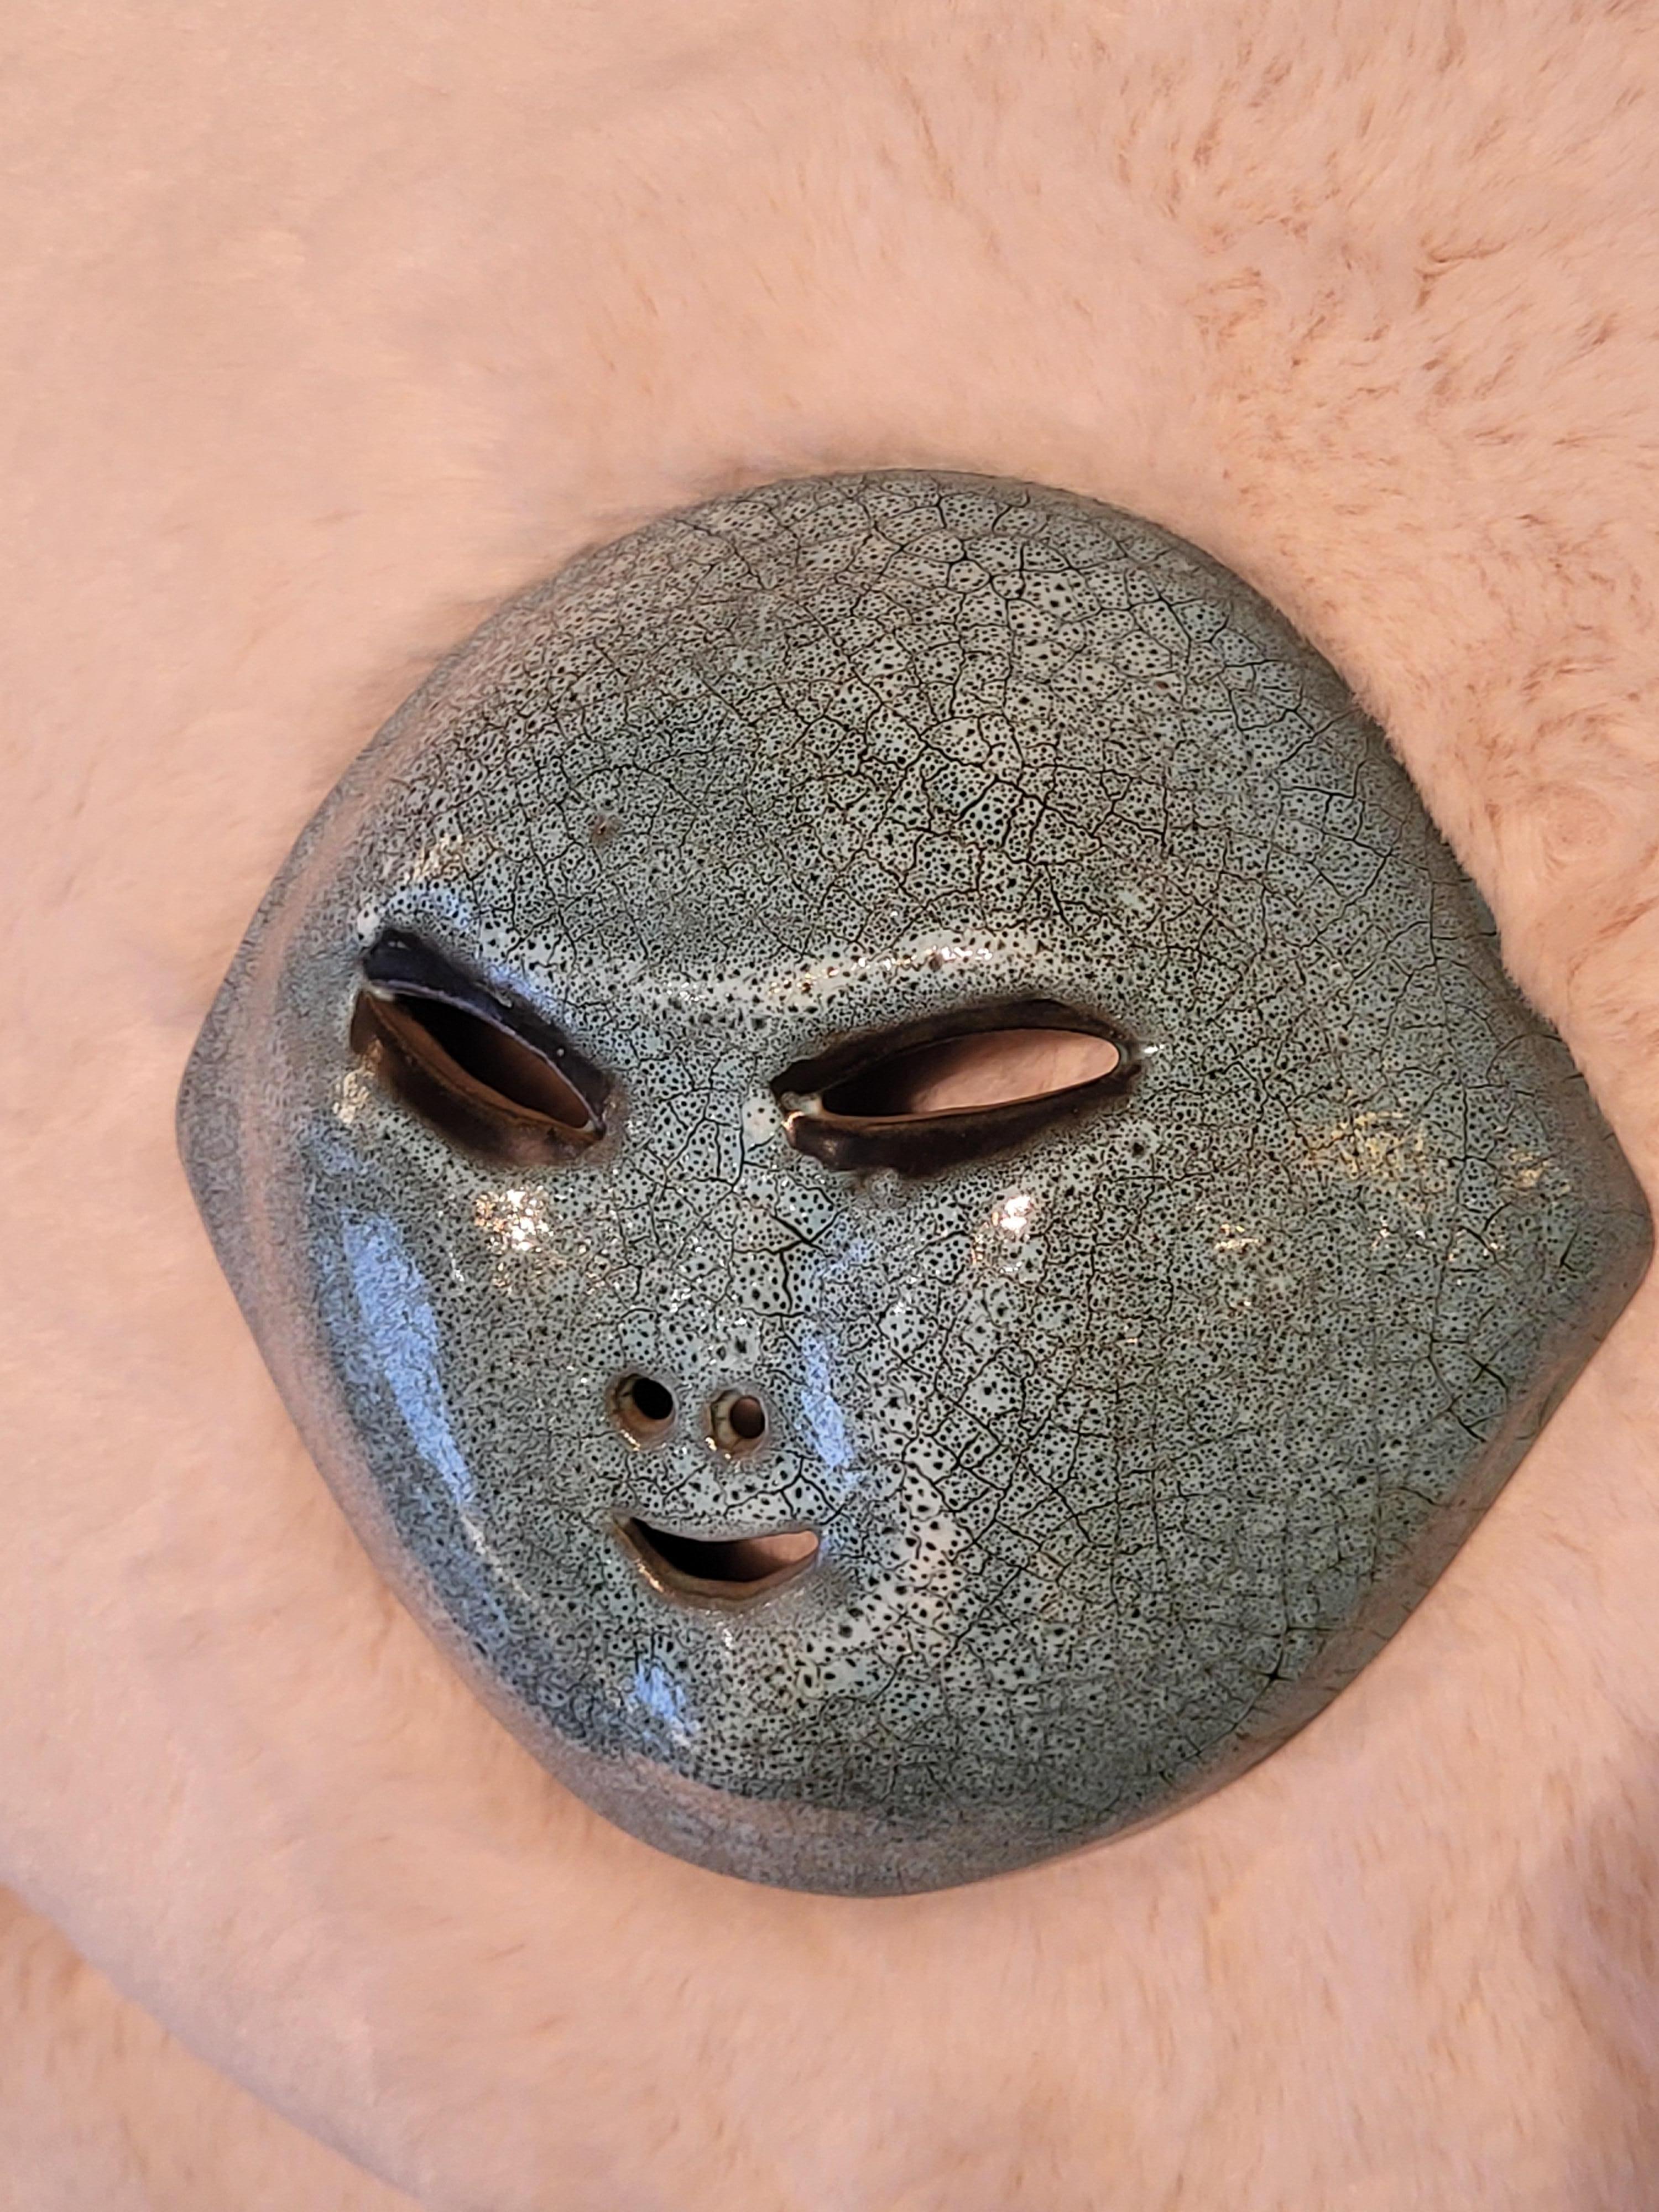 baldwin mask for sale